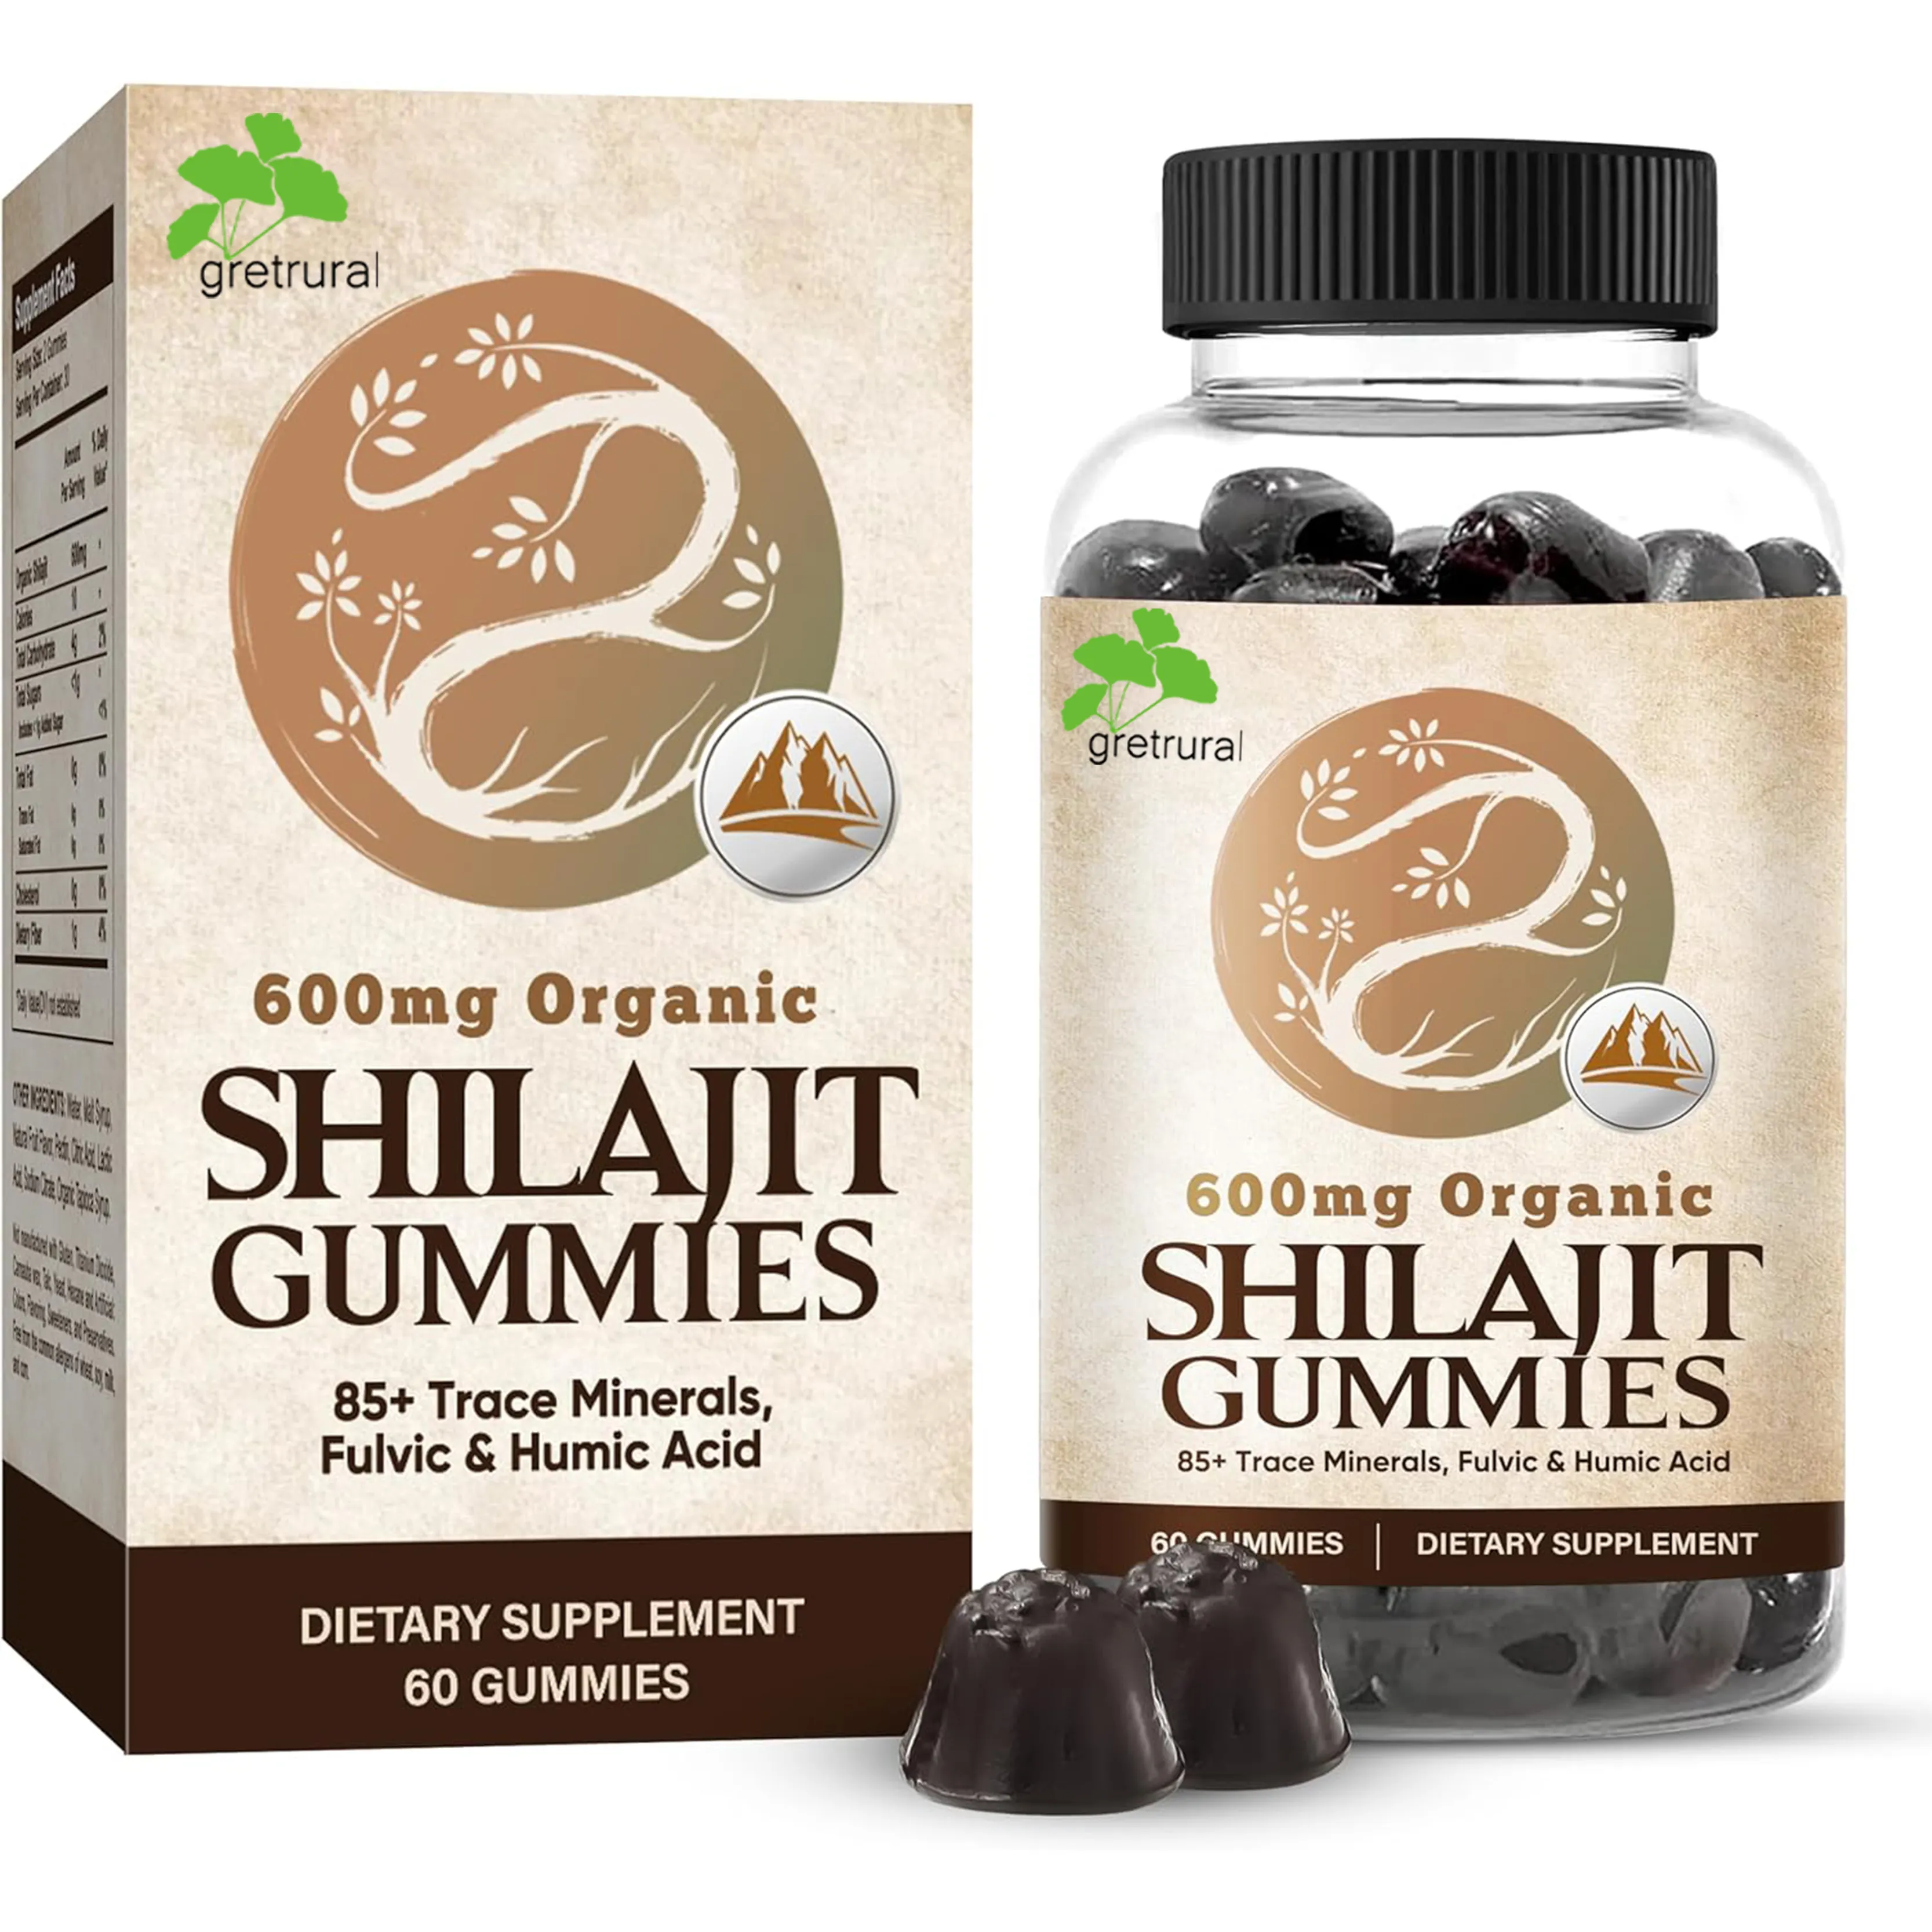 OEM/ODM Shilajit Gummies (60 Count) - Made of Pure Organic Himalayan Shilajit Resin - Source of Natural Fulvic and Humic Acid